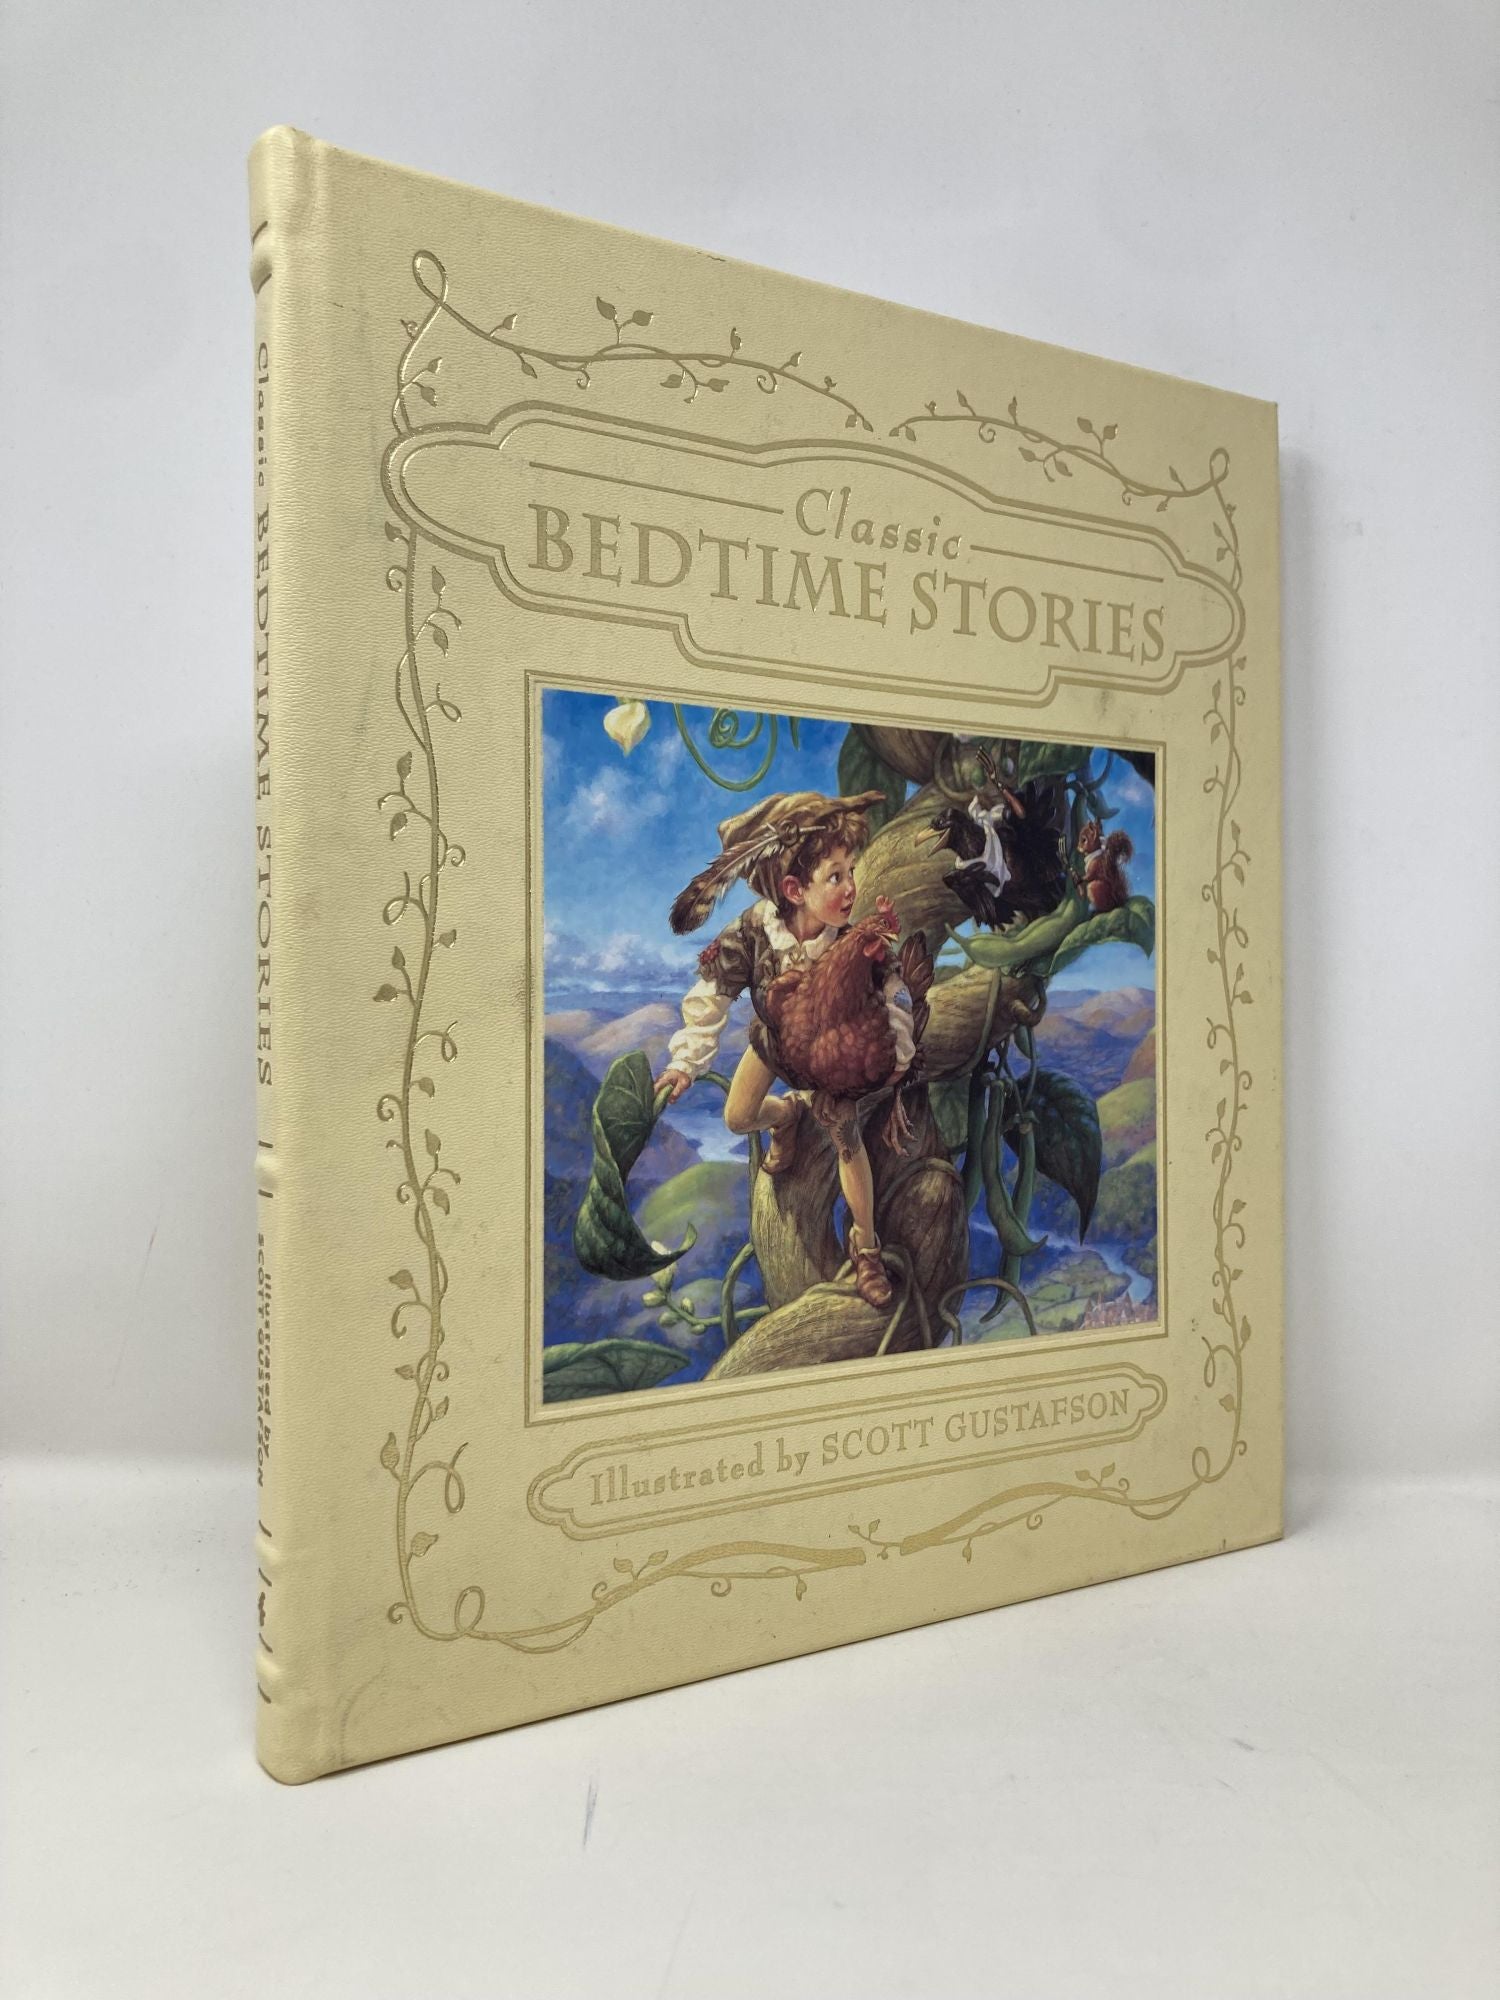 Classic Bedtime Stories by Scott Gustafson on Sag Harbor Books